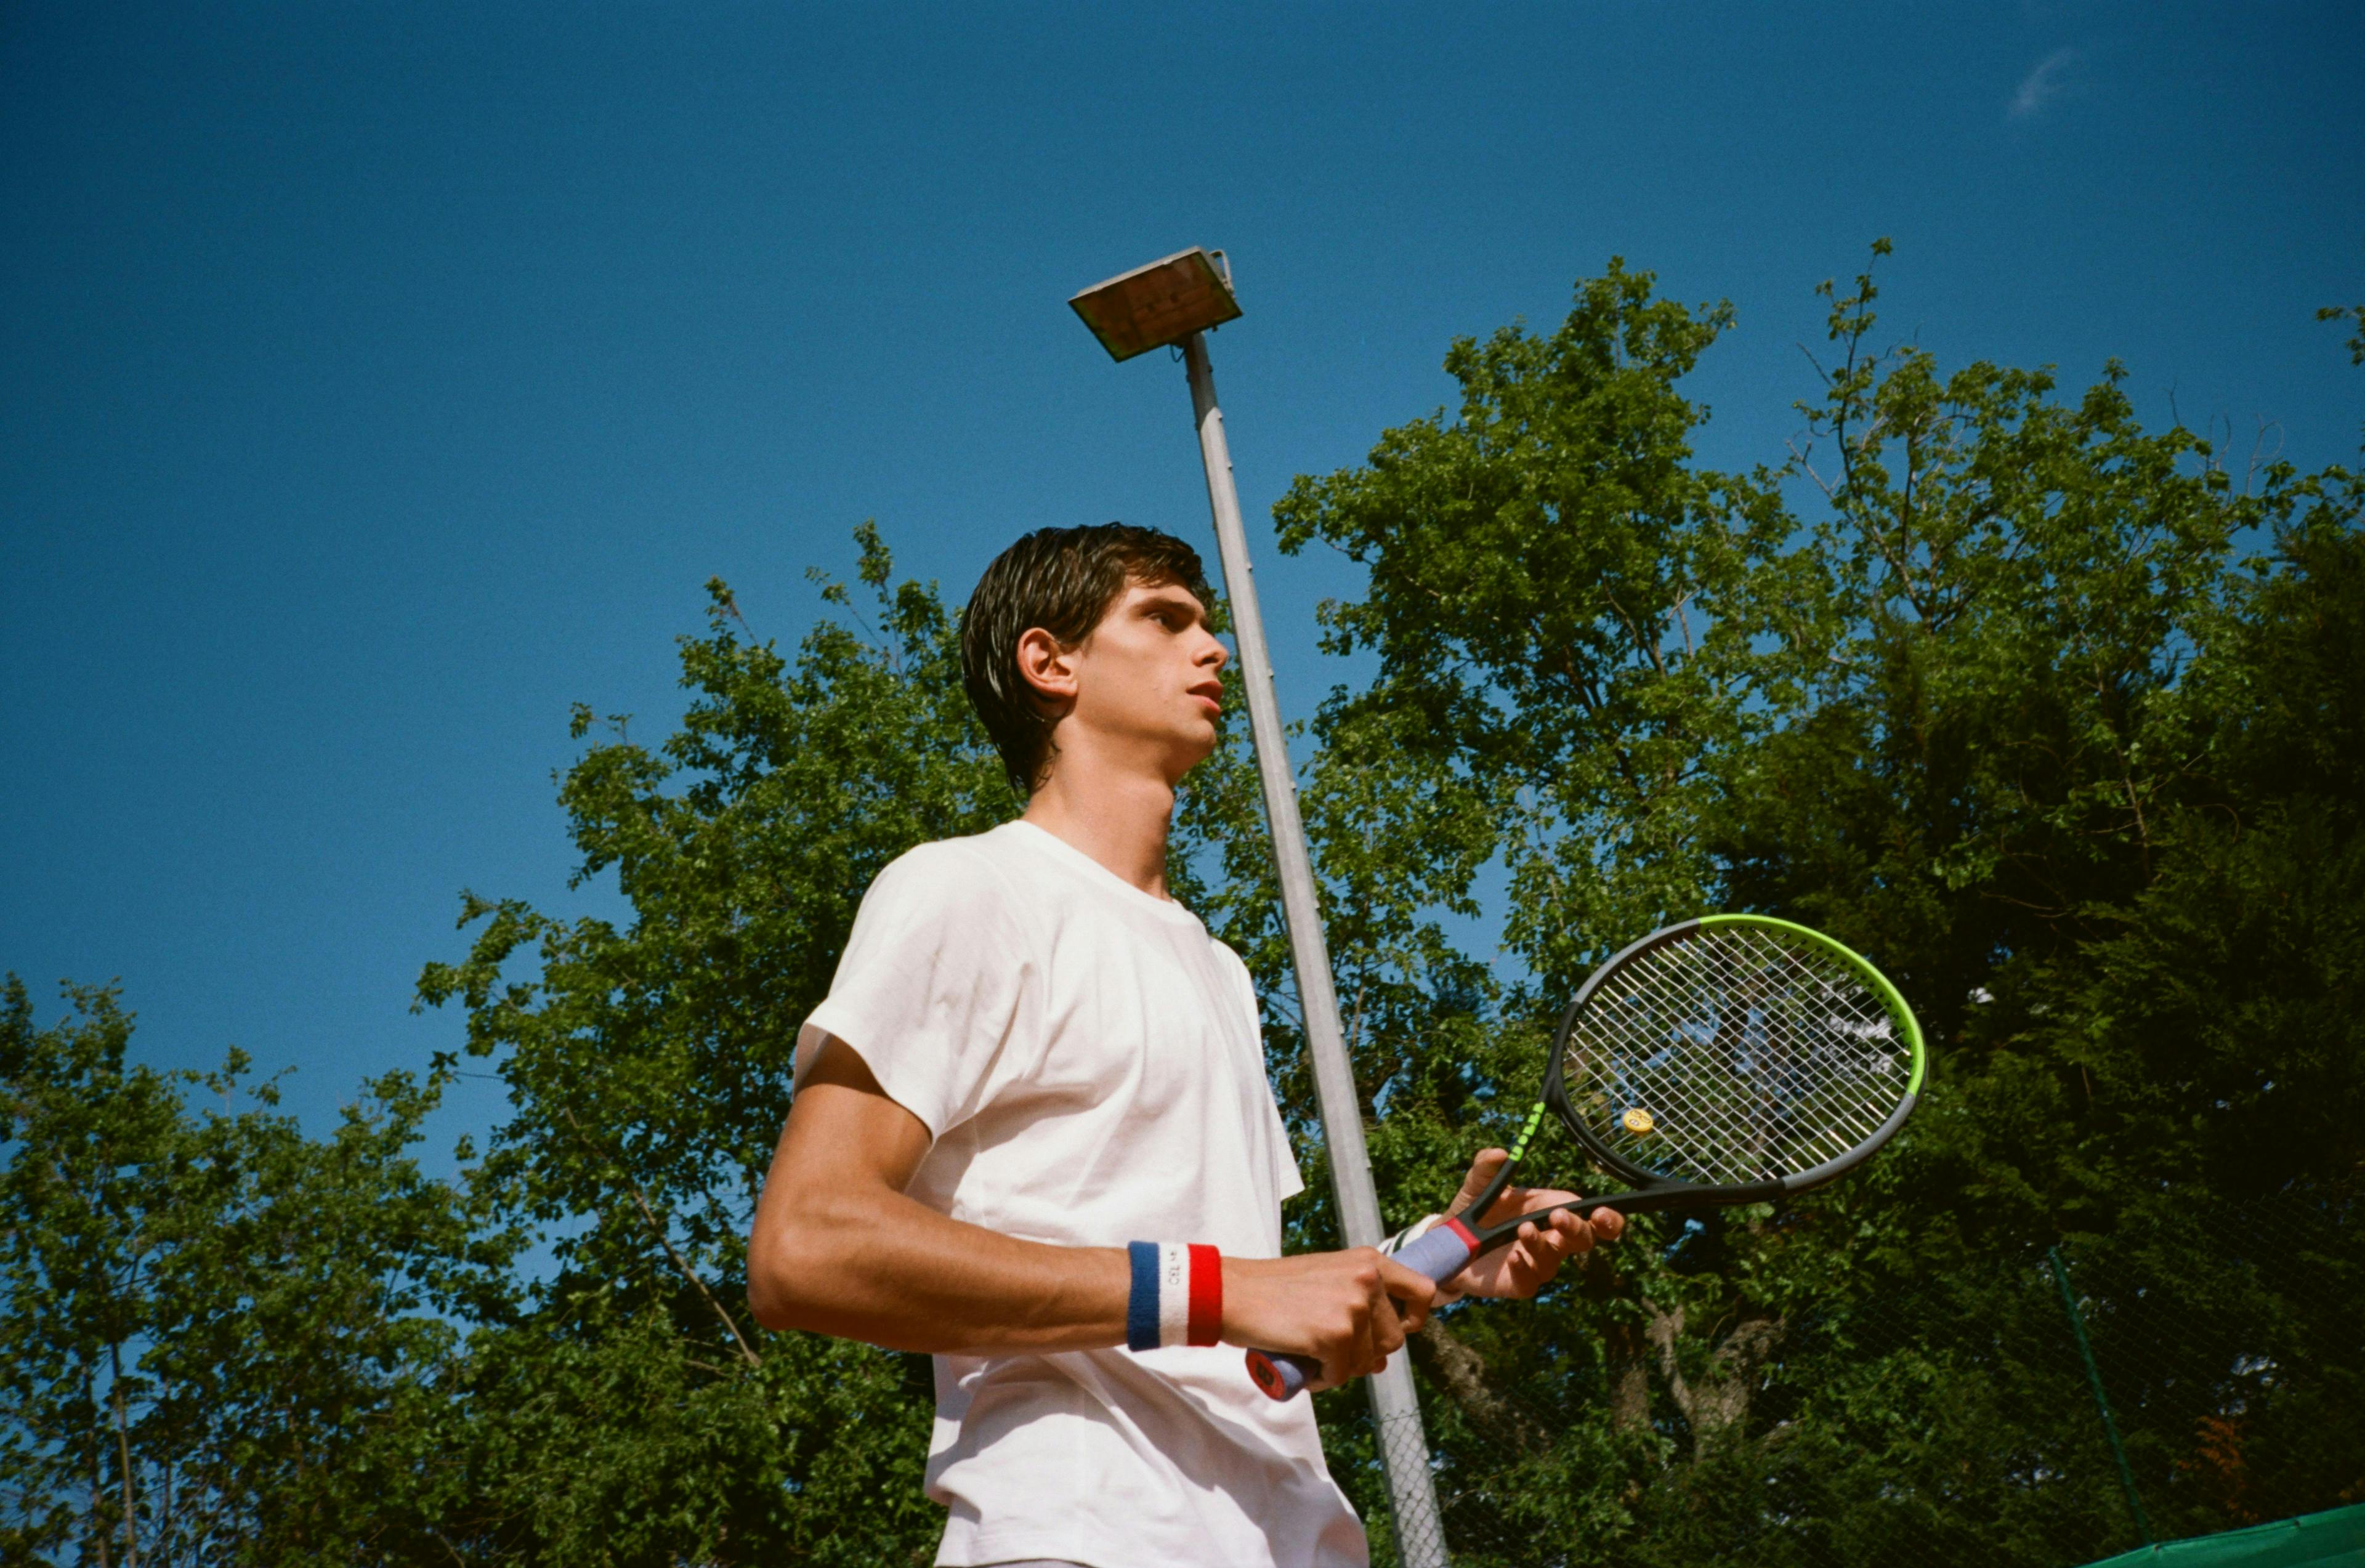 person human tennis racket racket sport sports clothing apparel